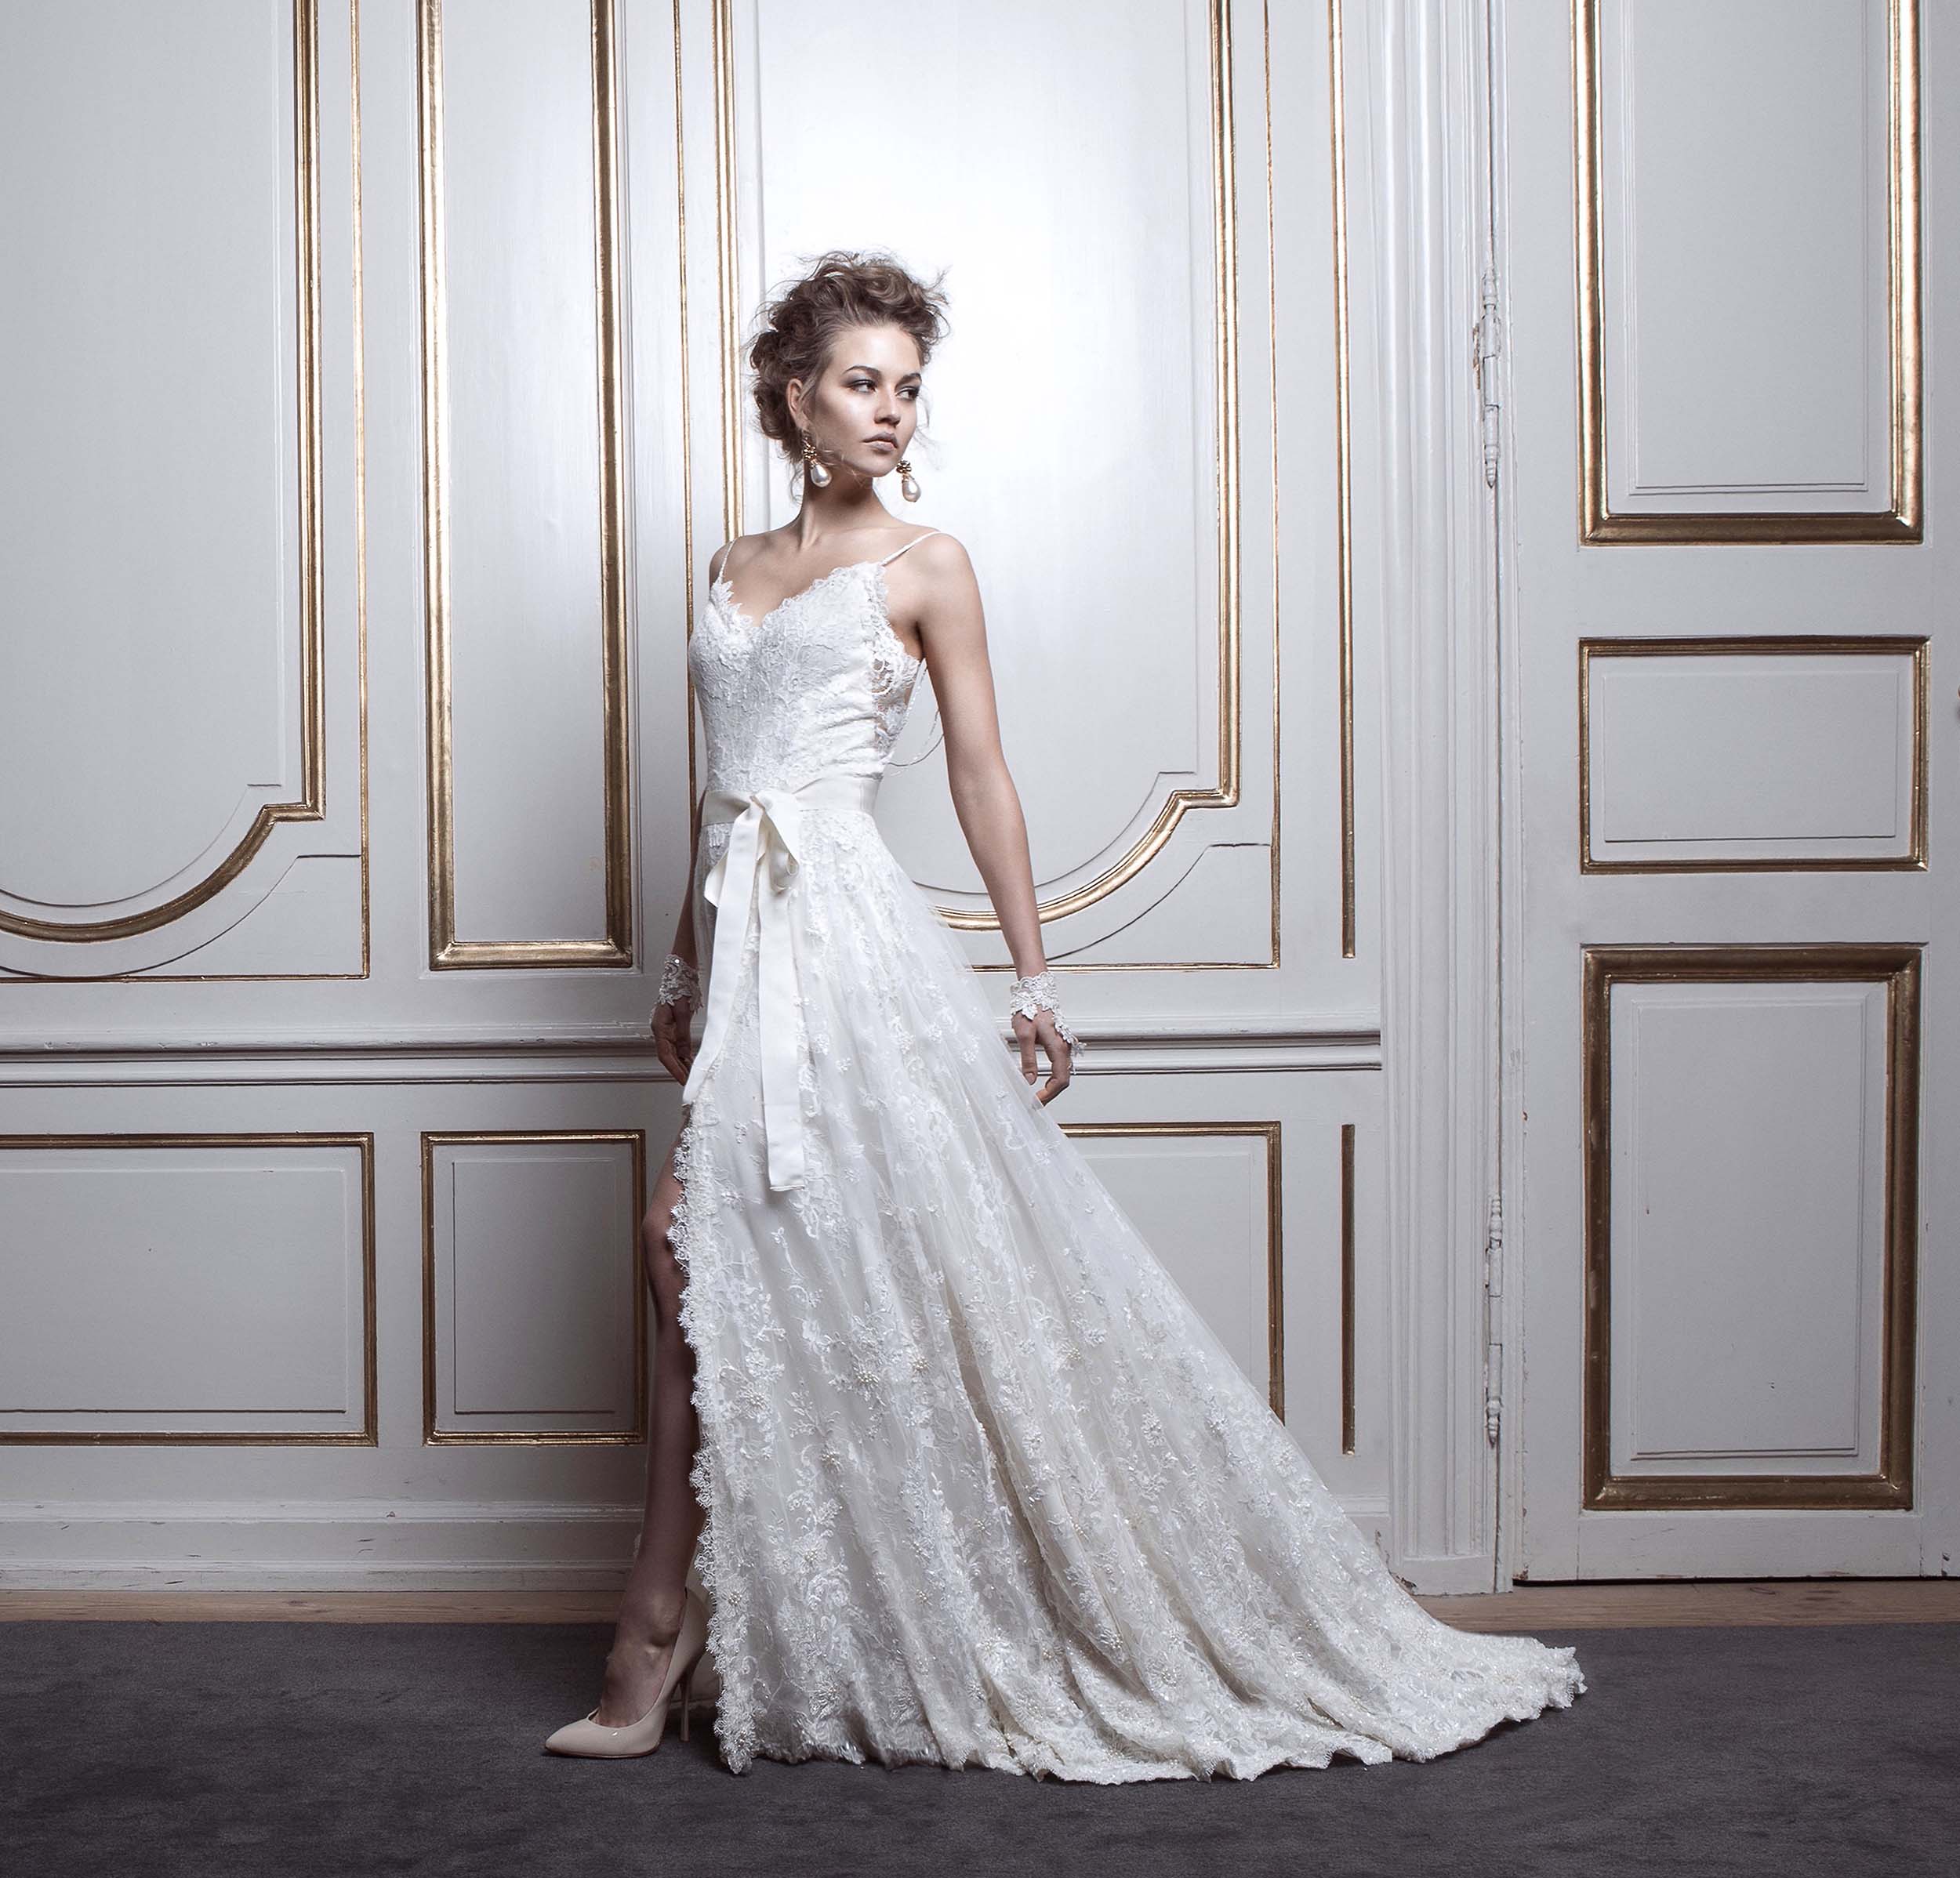 angelika Dluzen bridal couture brudekjoler udsalg